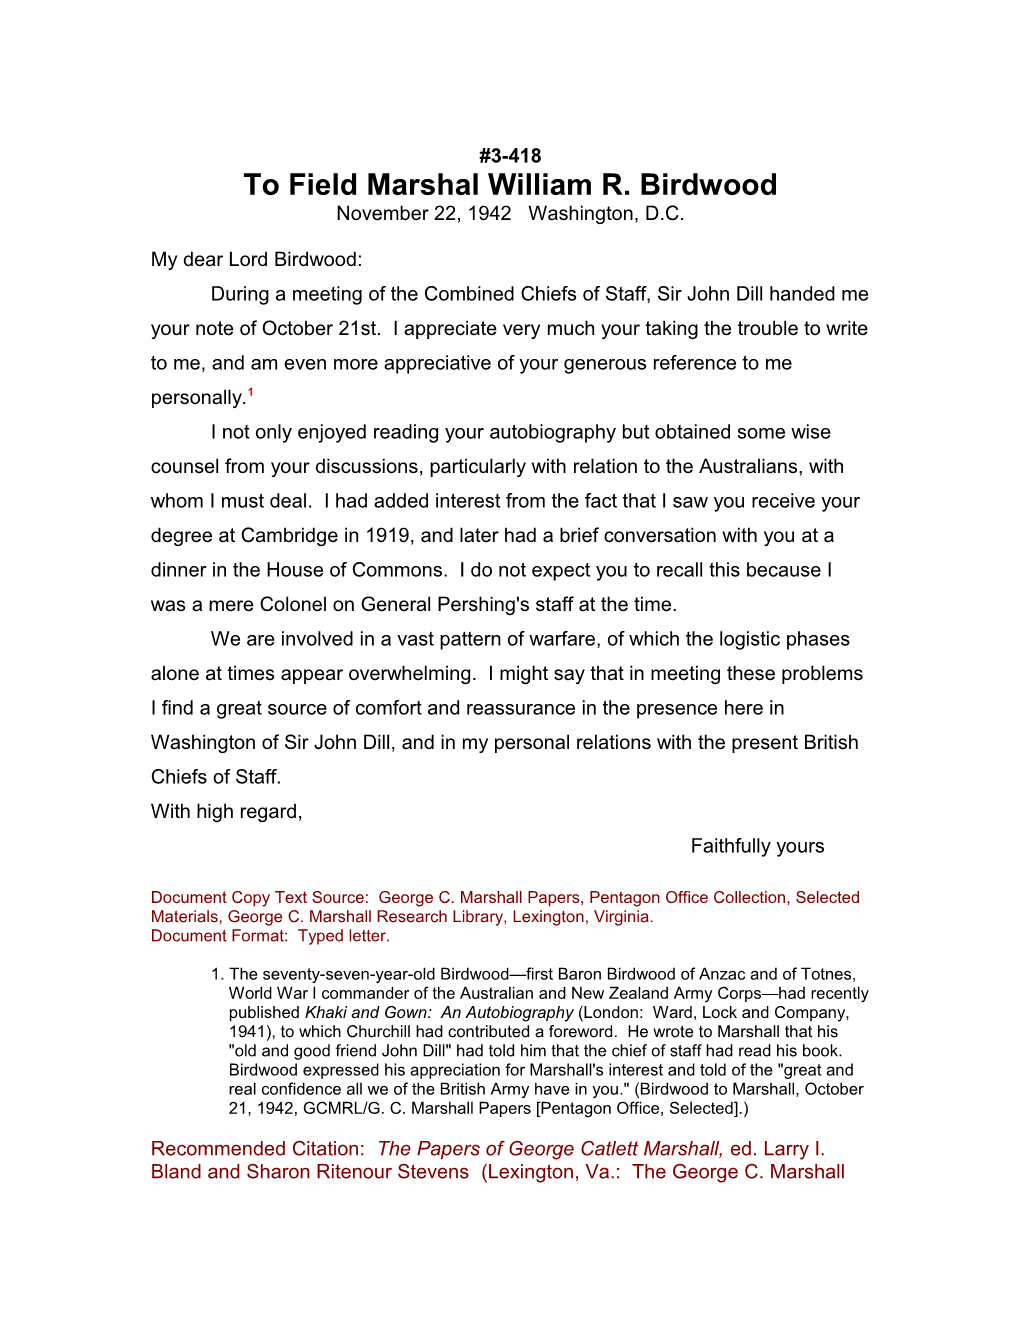 To Field Marshal William R. Birdwood